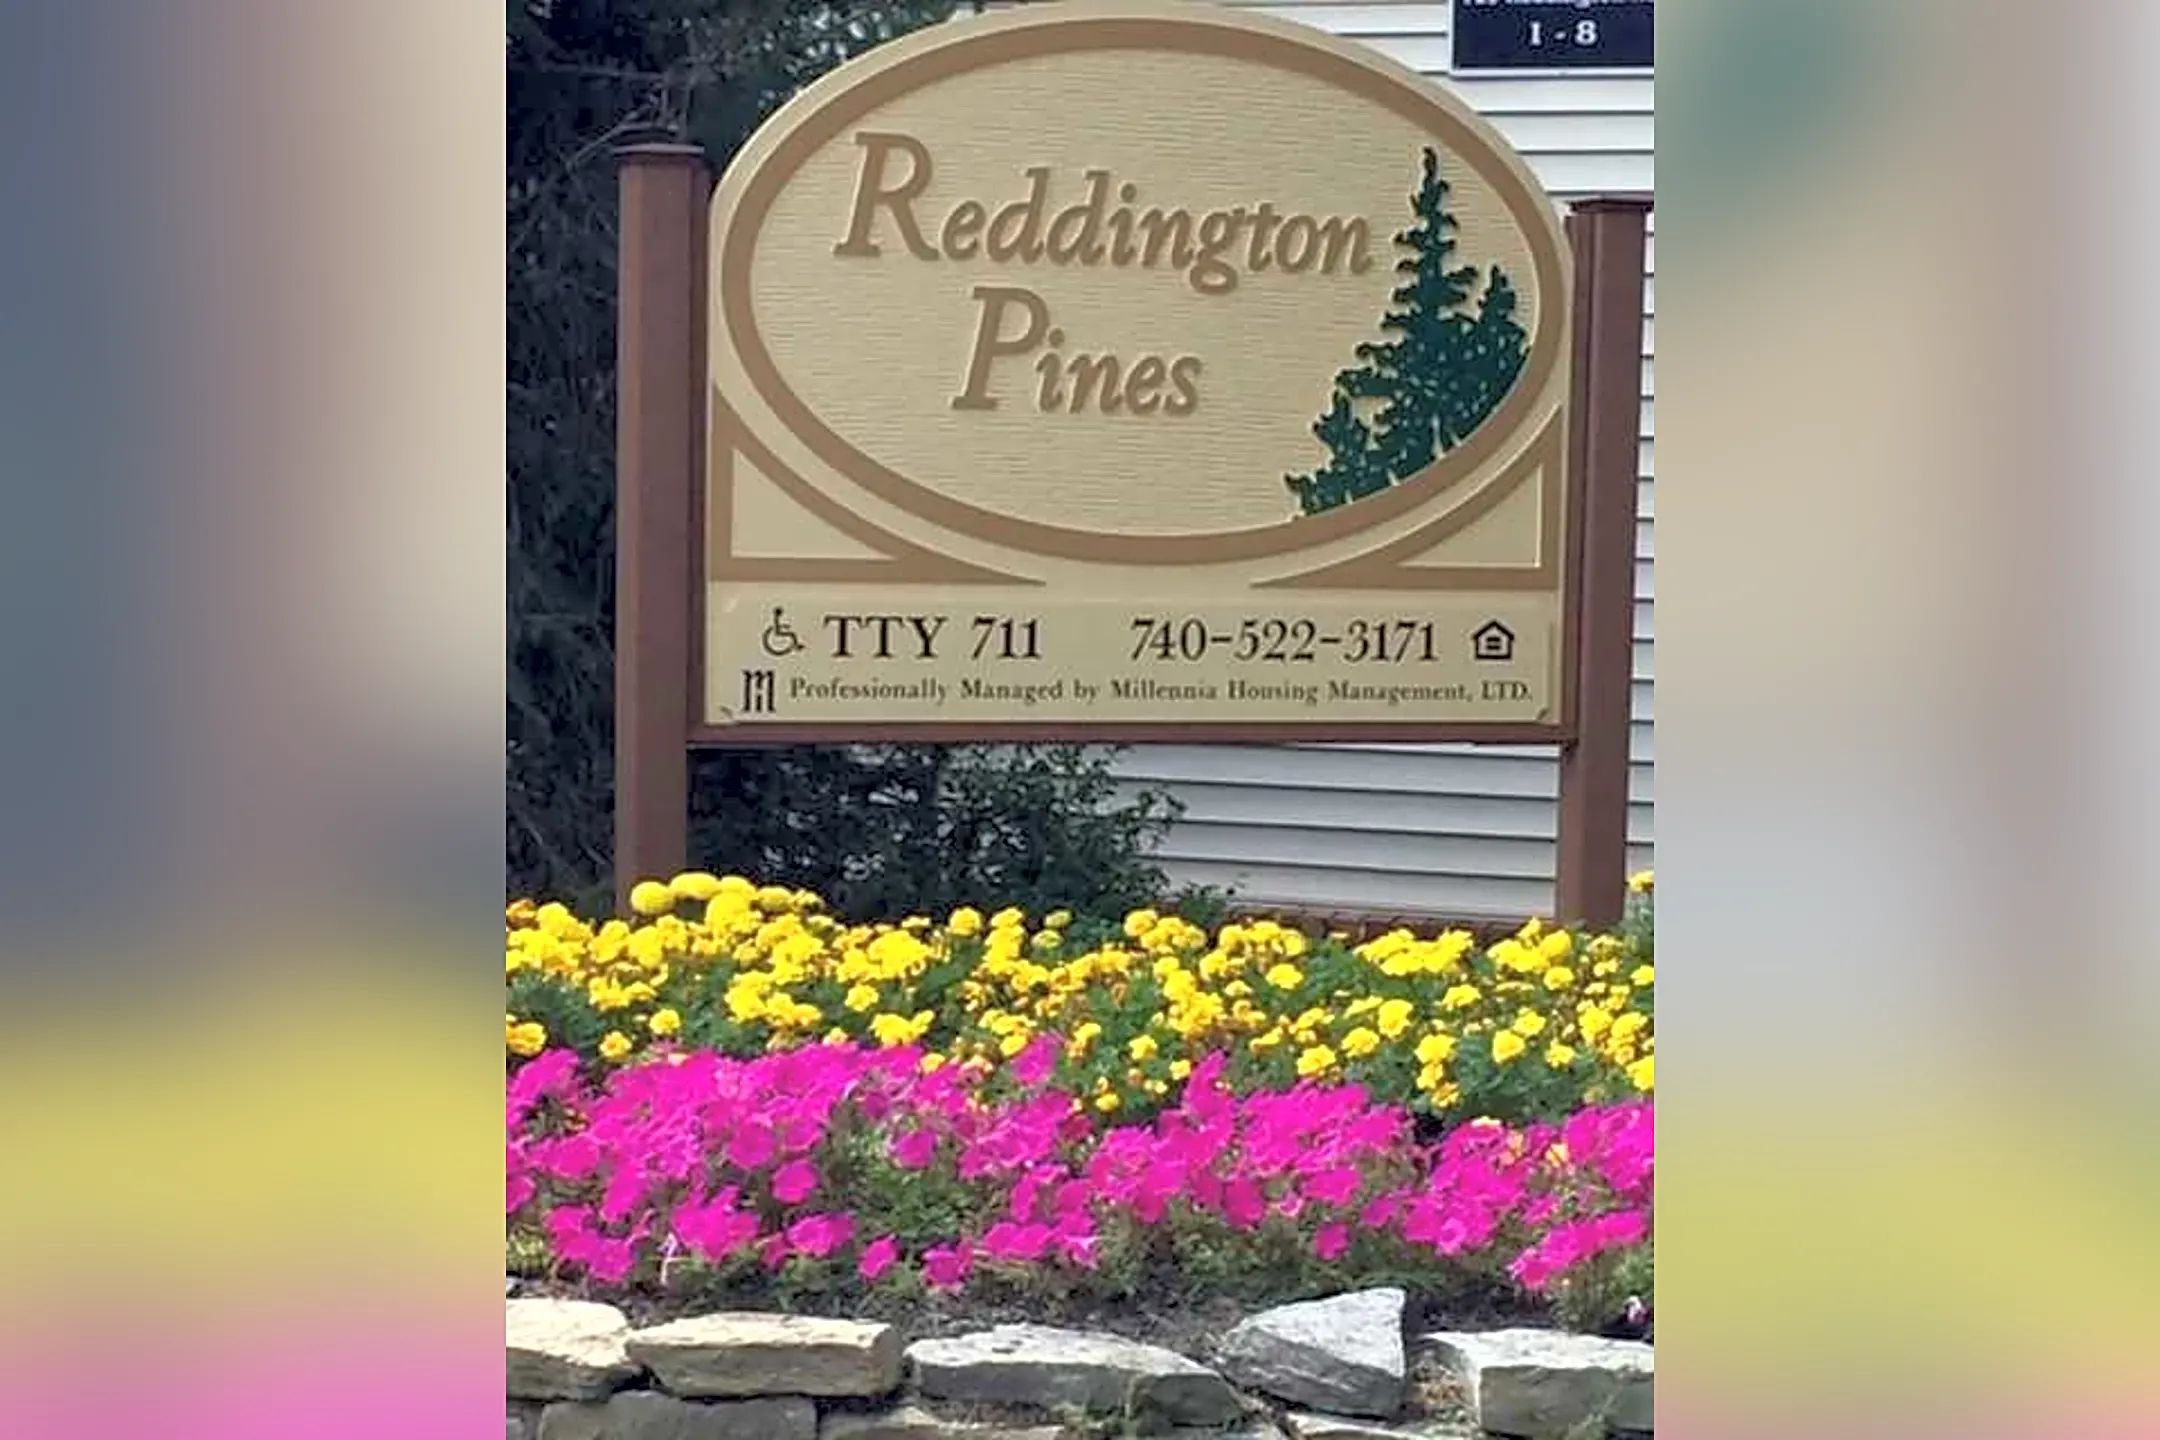 Reddington Pines - Newark, OH